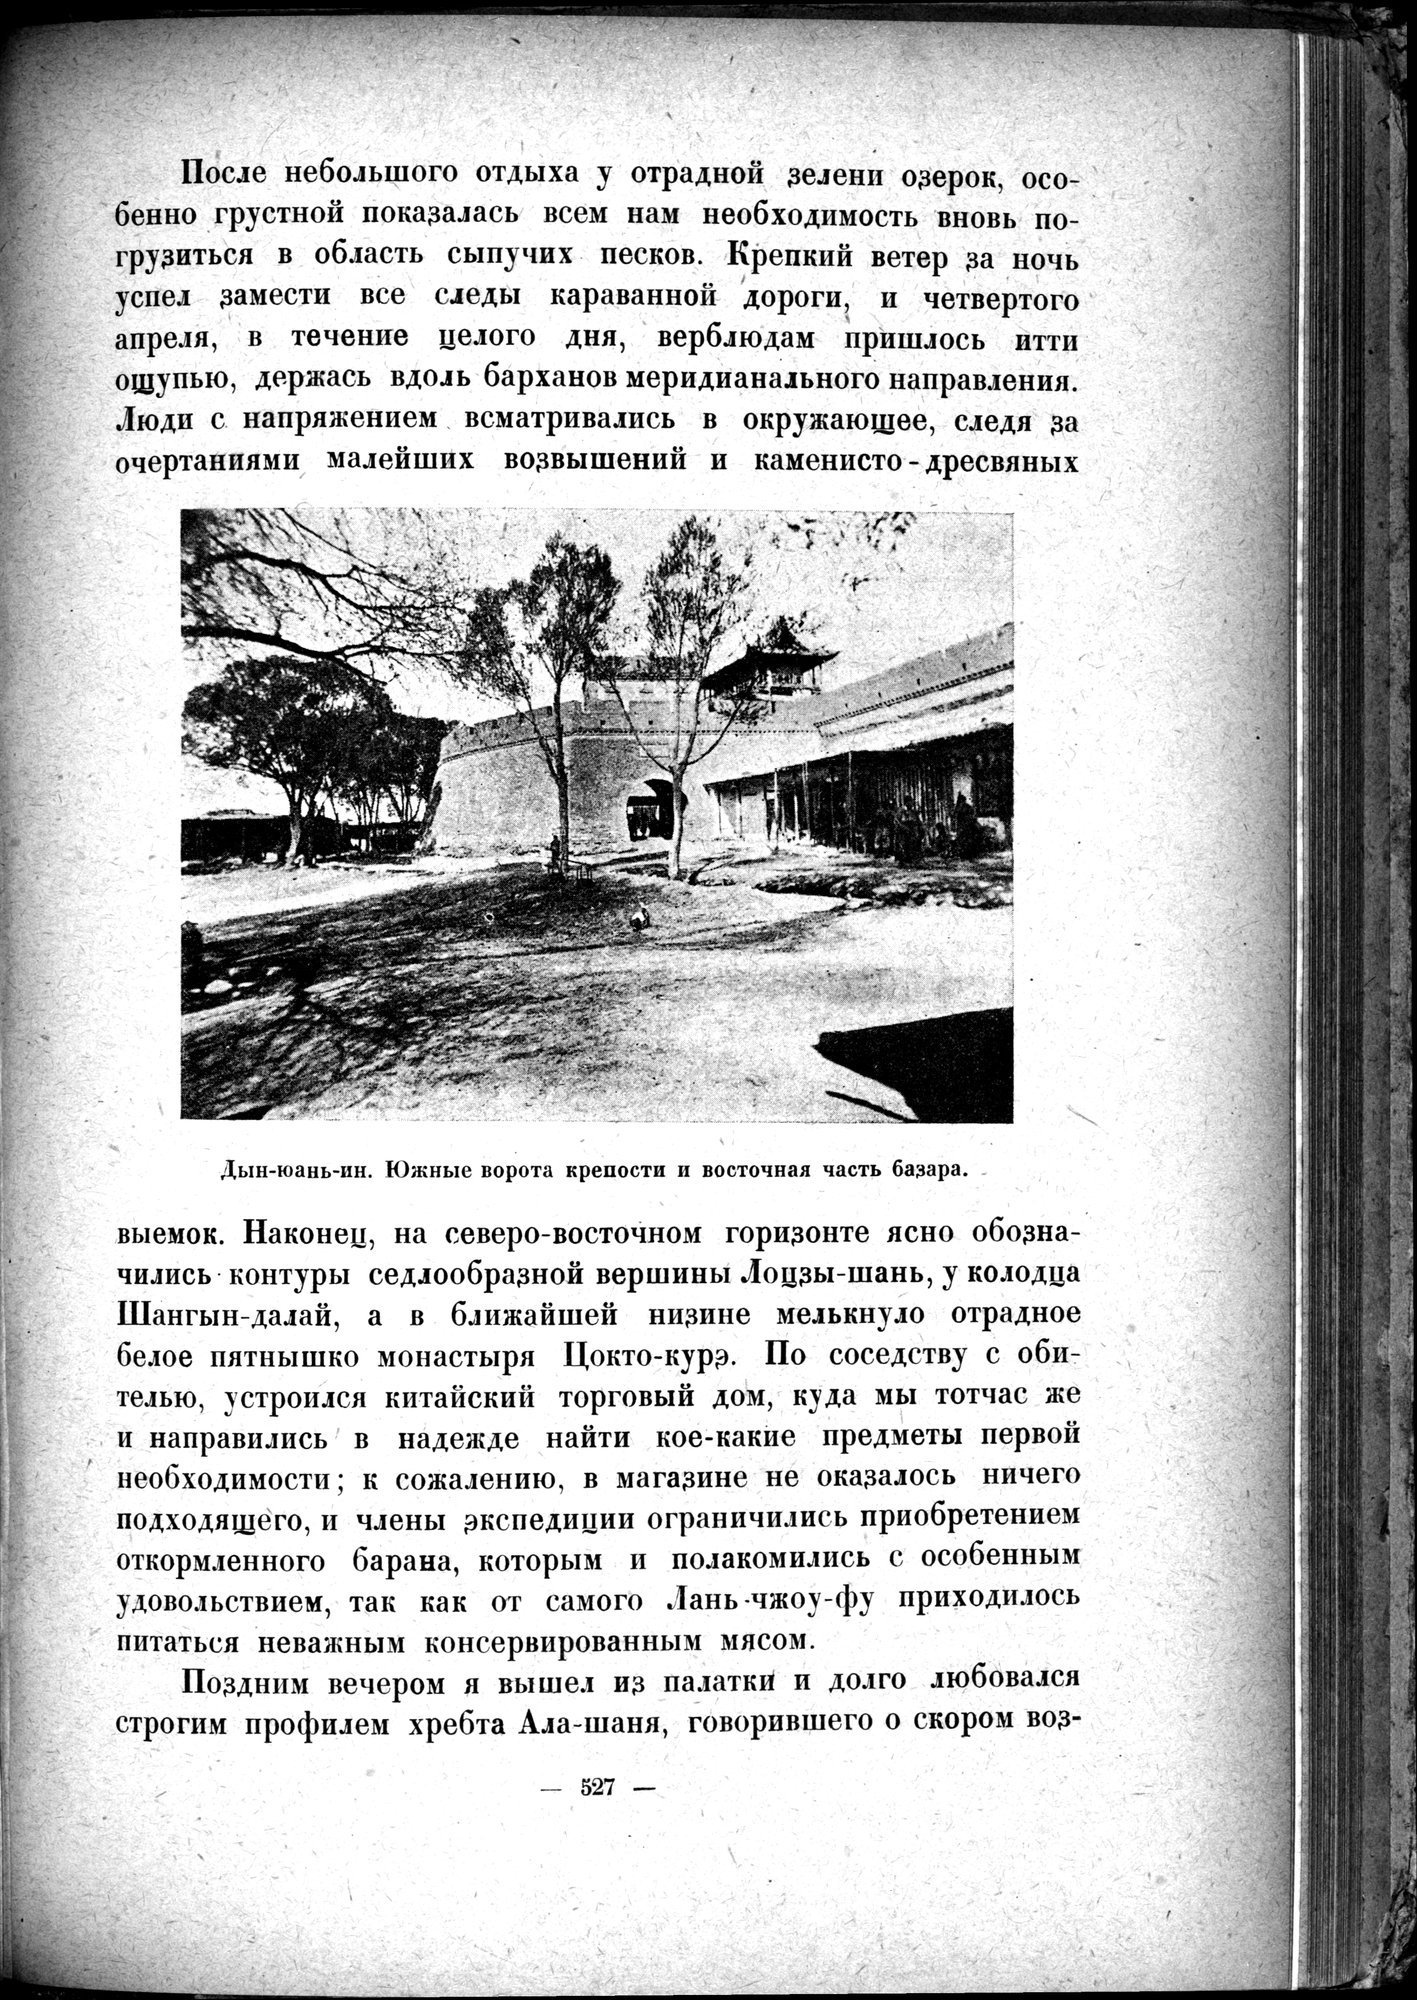 Mongoliya i Amdo i mertby gorod Khara-Khoto : vol.1 / Page 611 (Grayscale High Resolution Image)